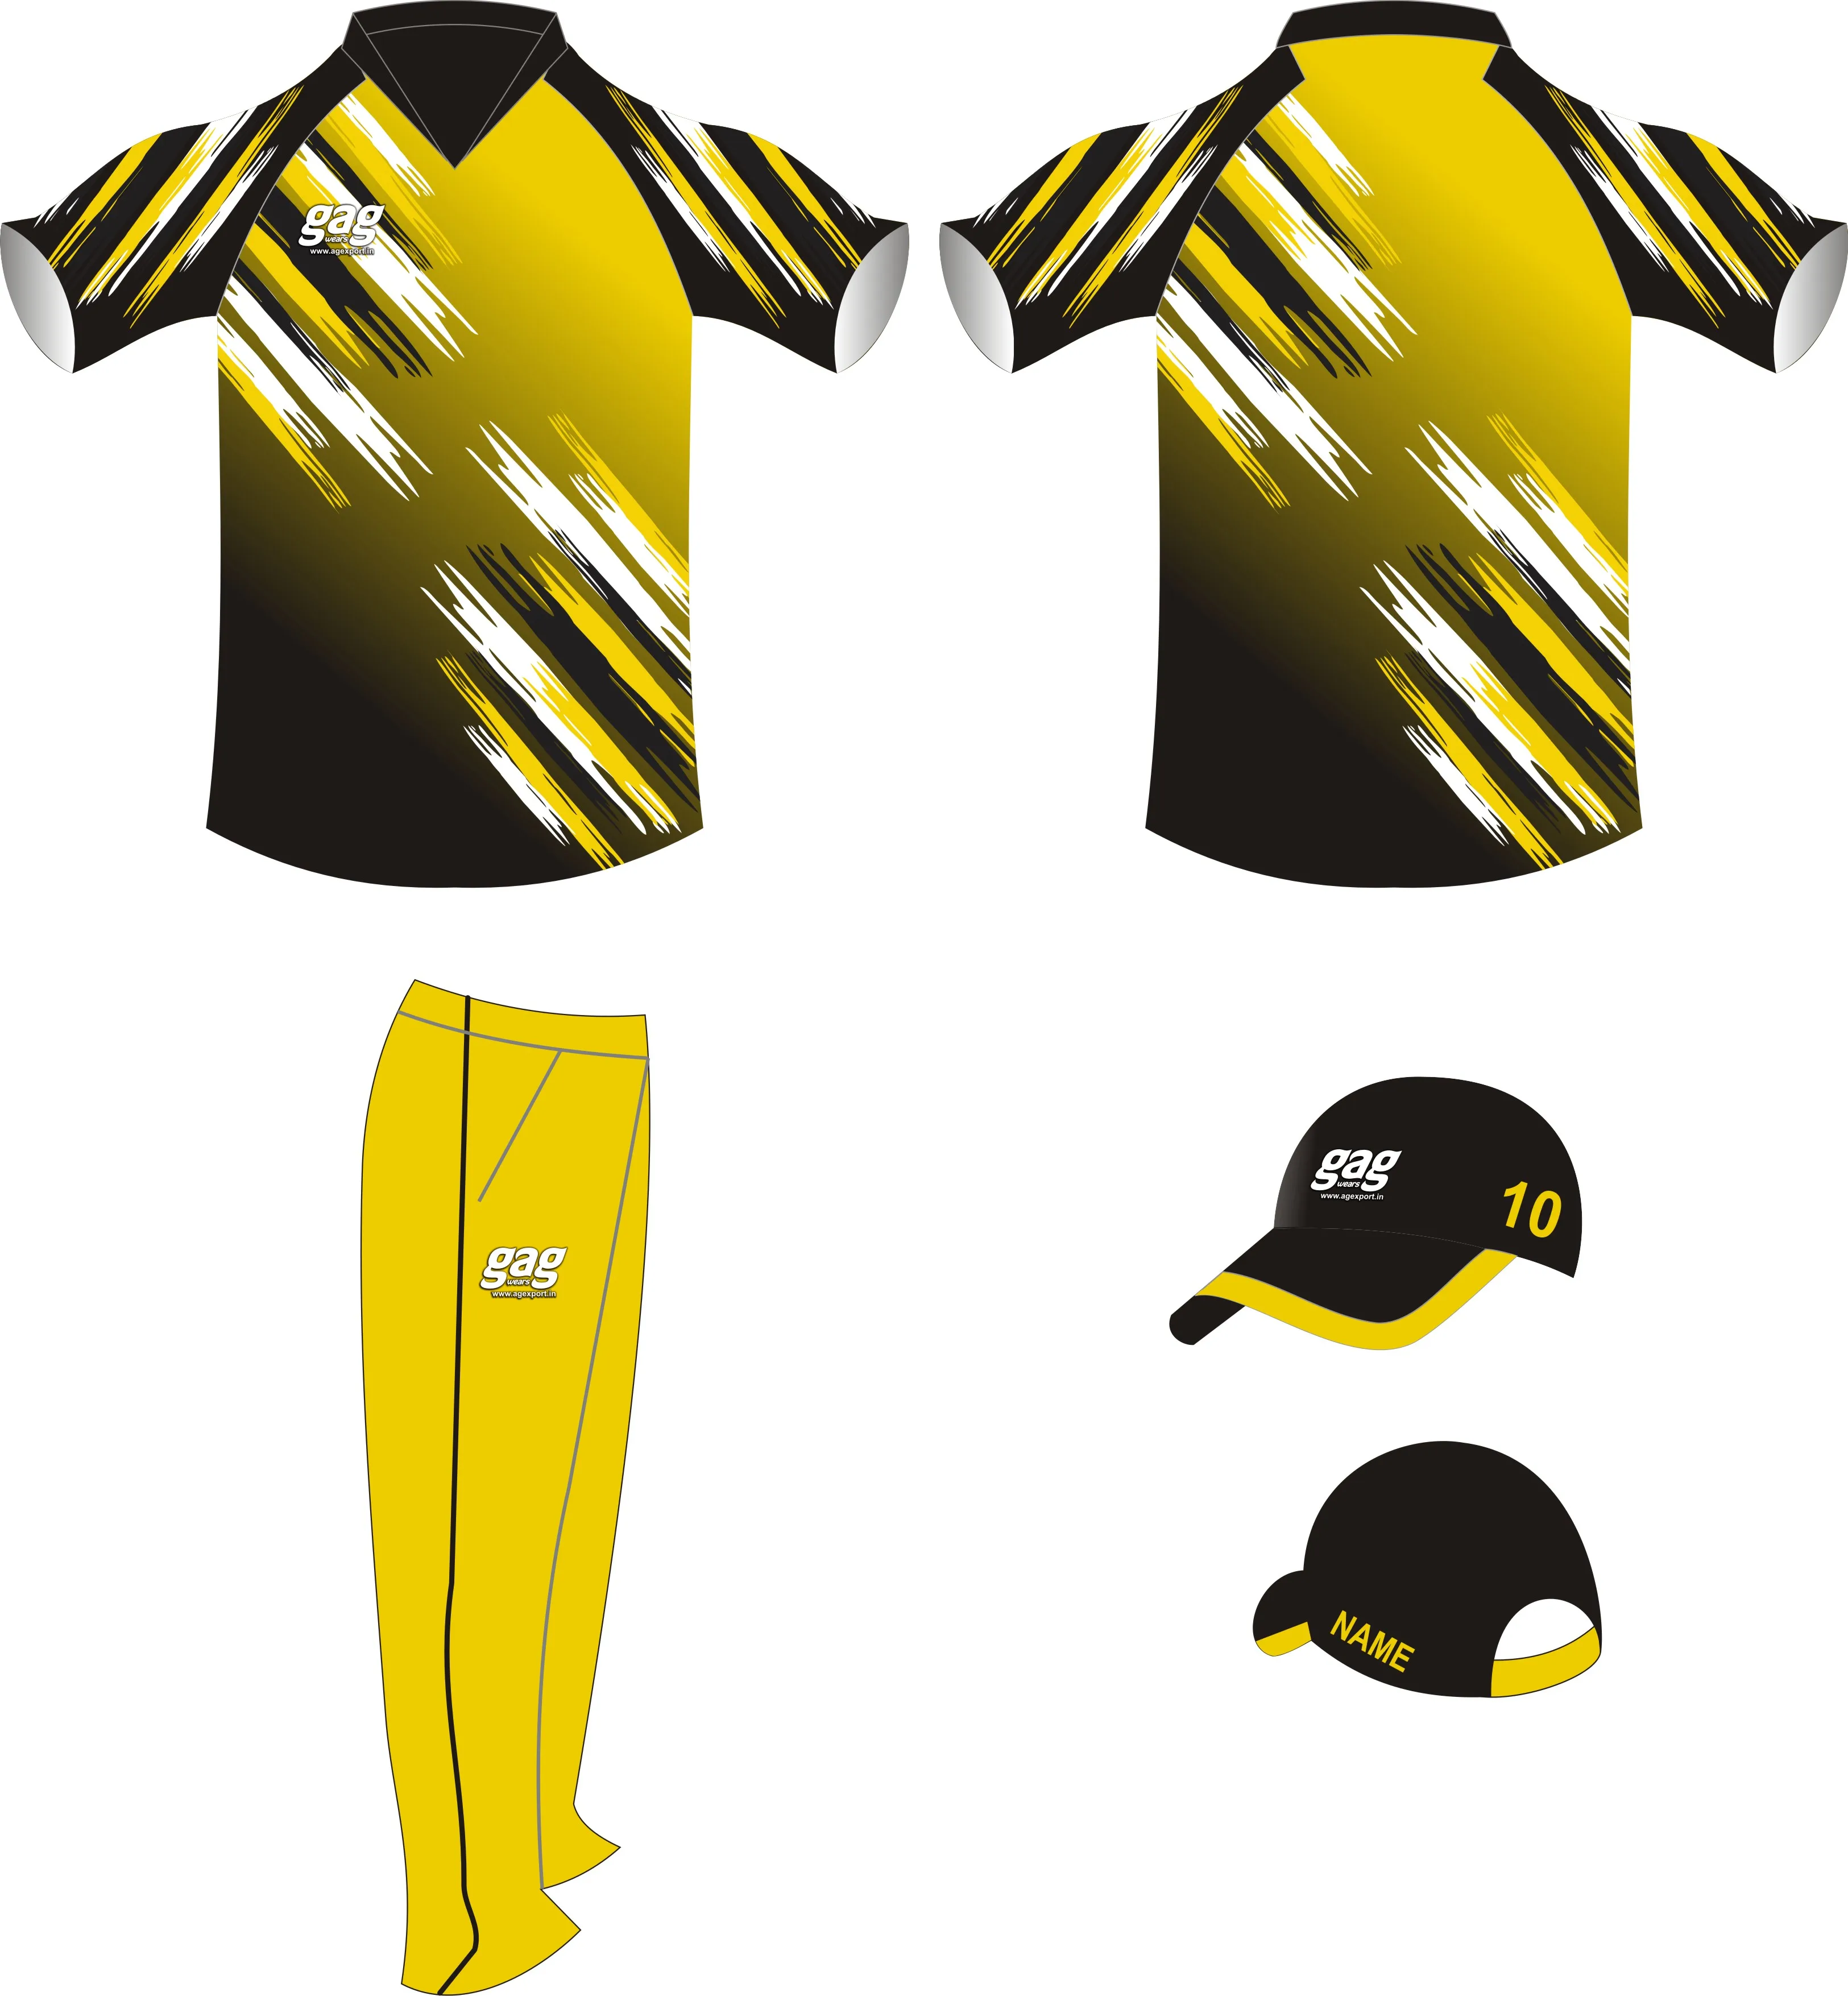 cricket kit design 2019